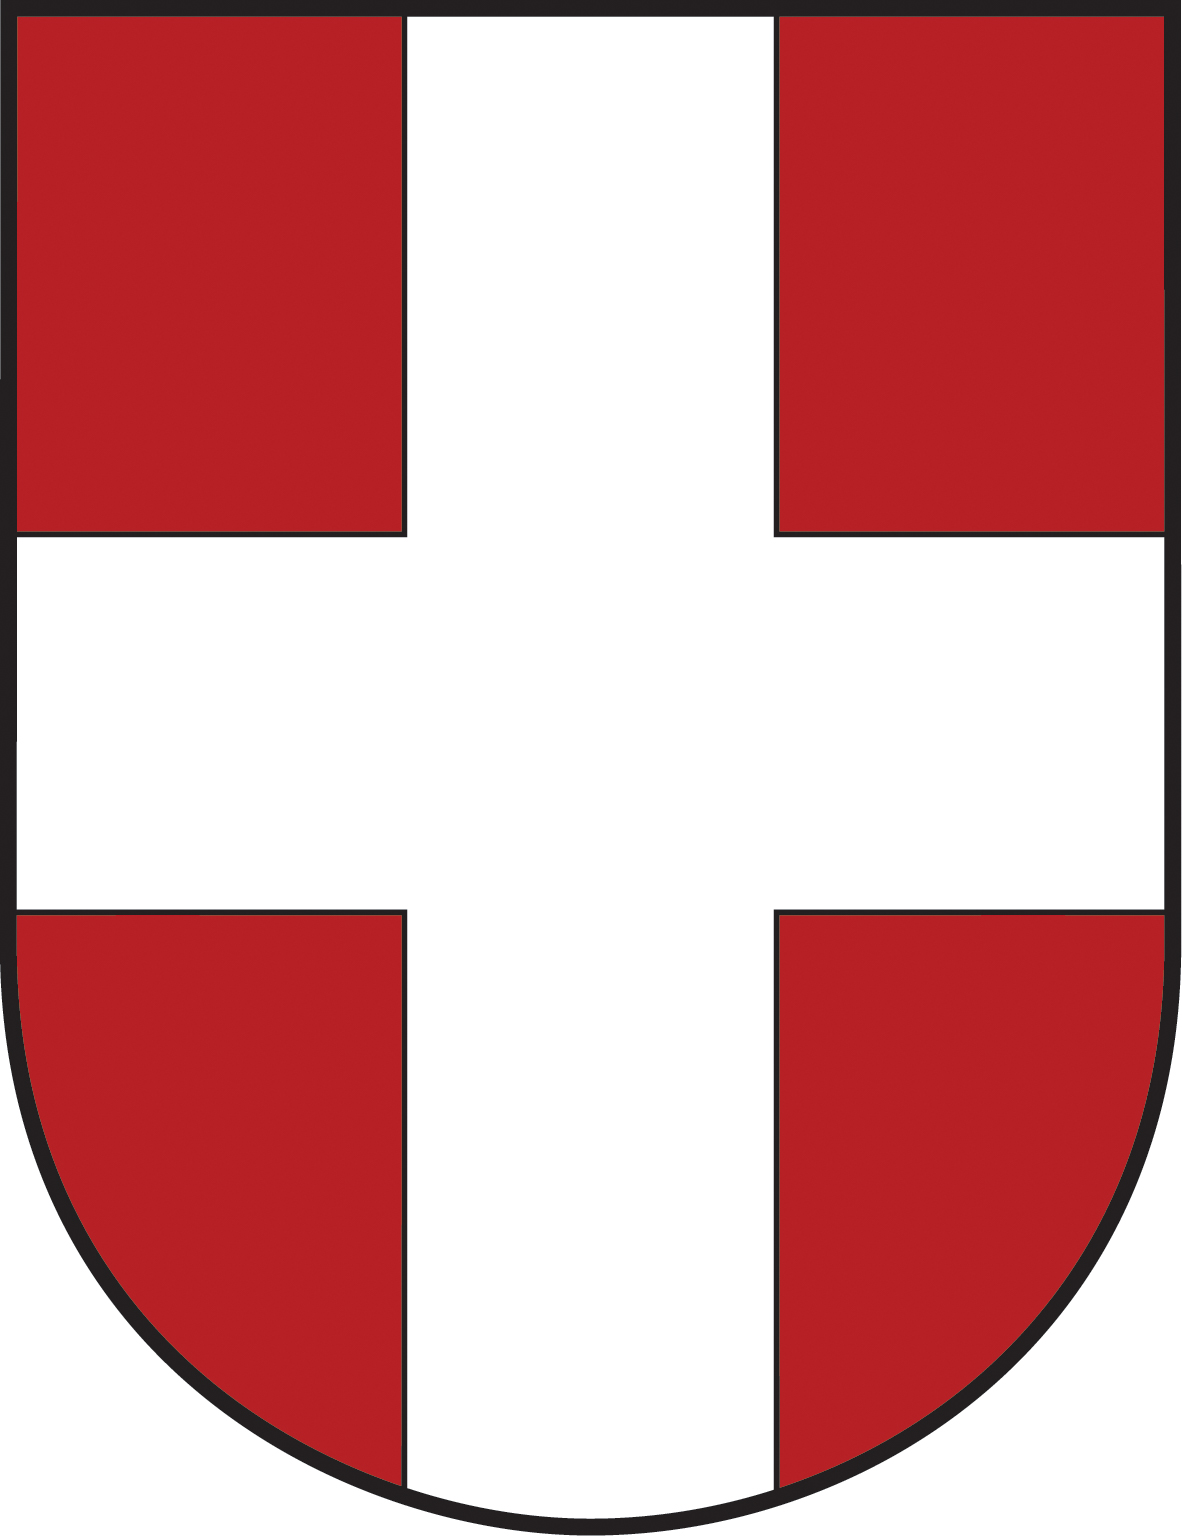 Das Wiener Wappen